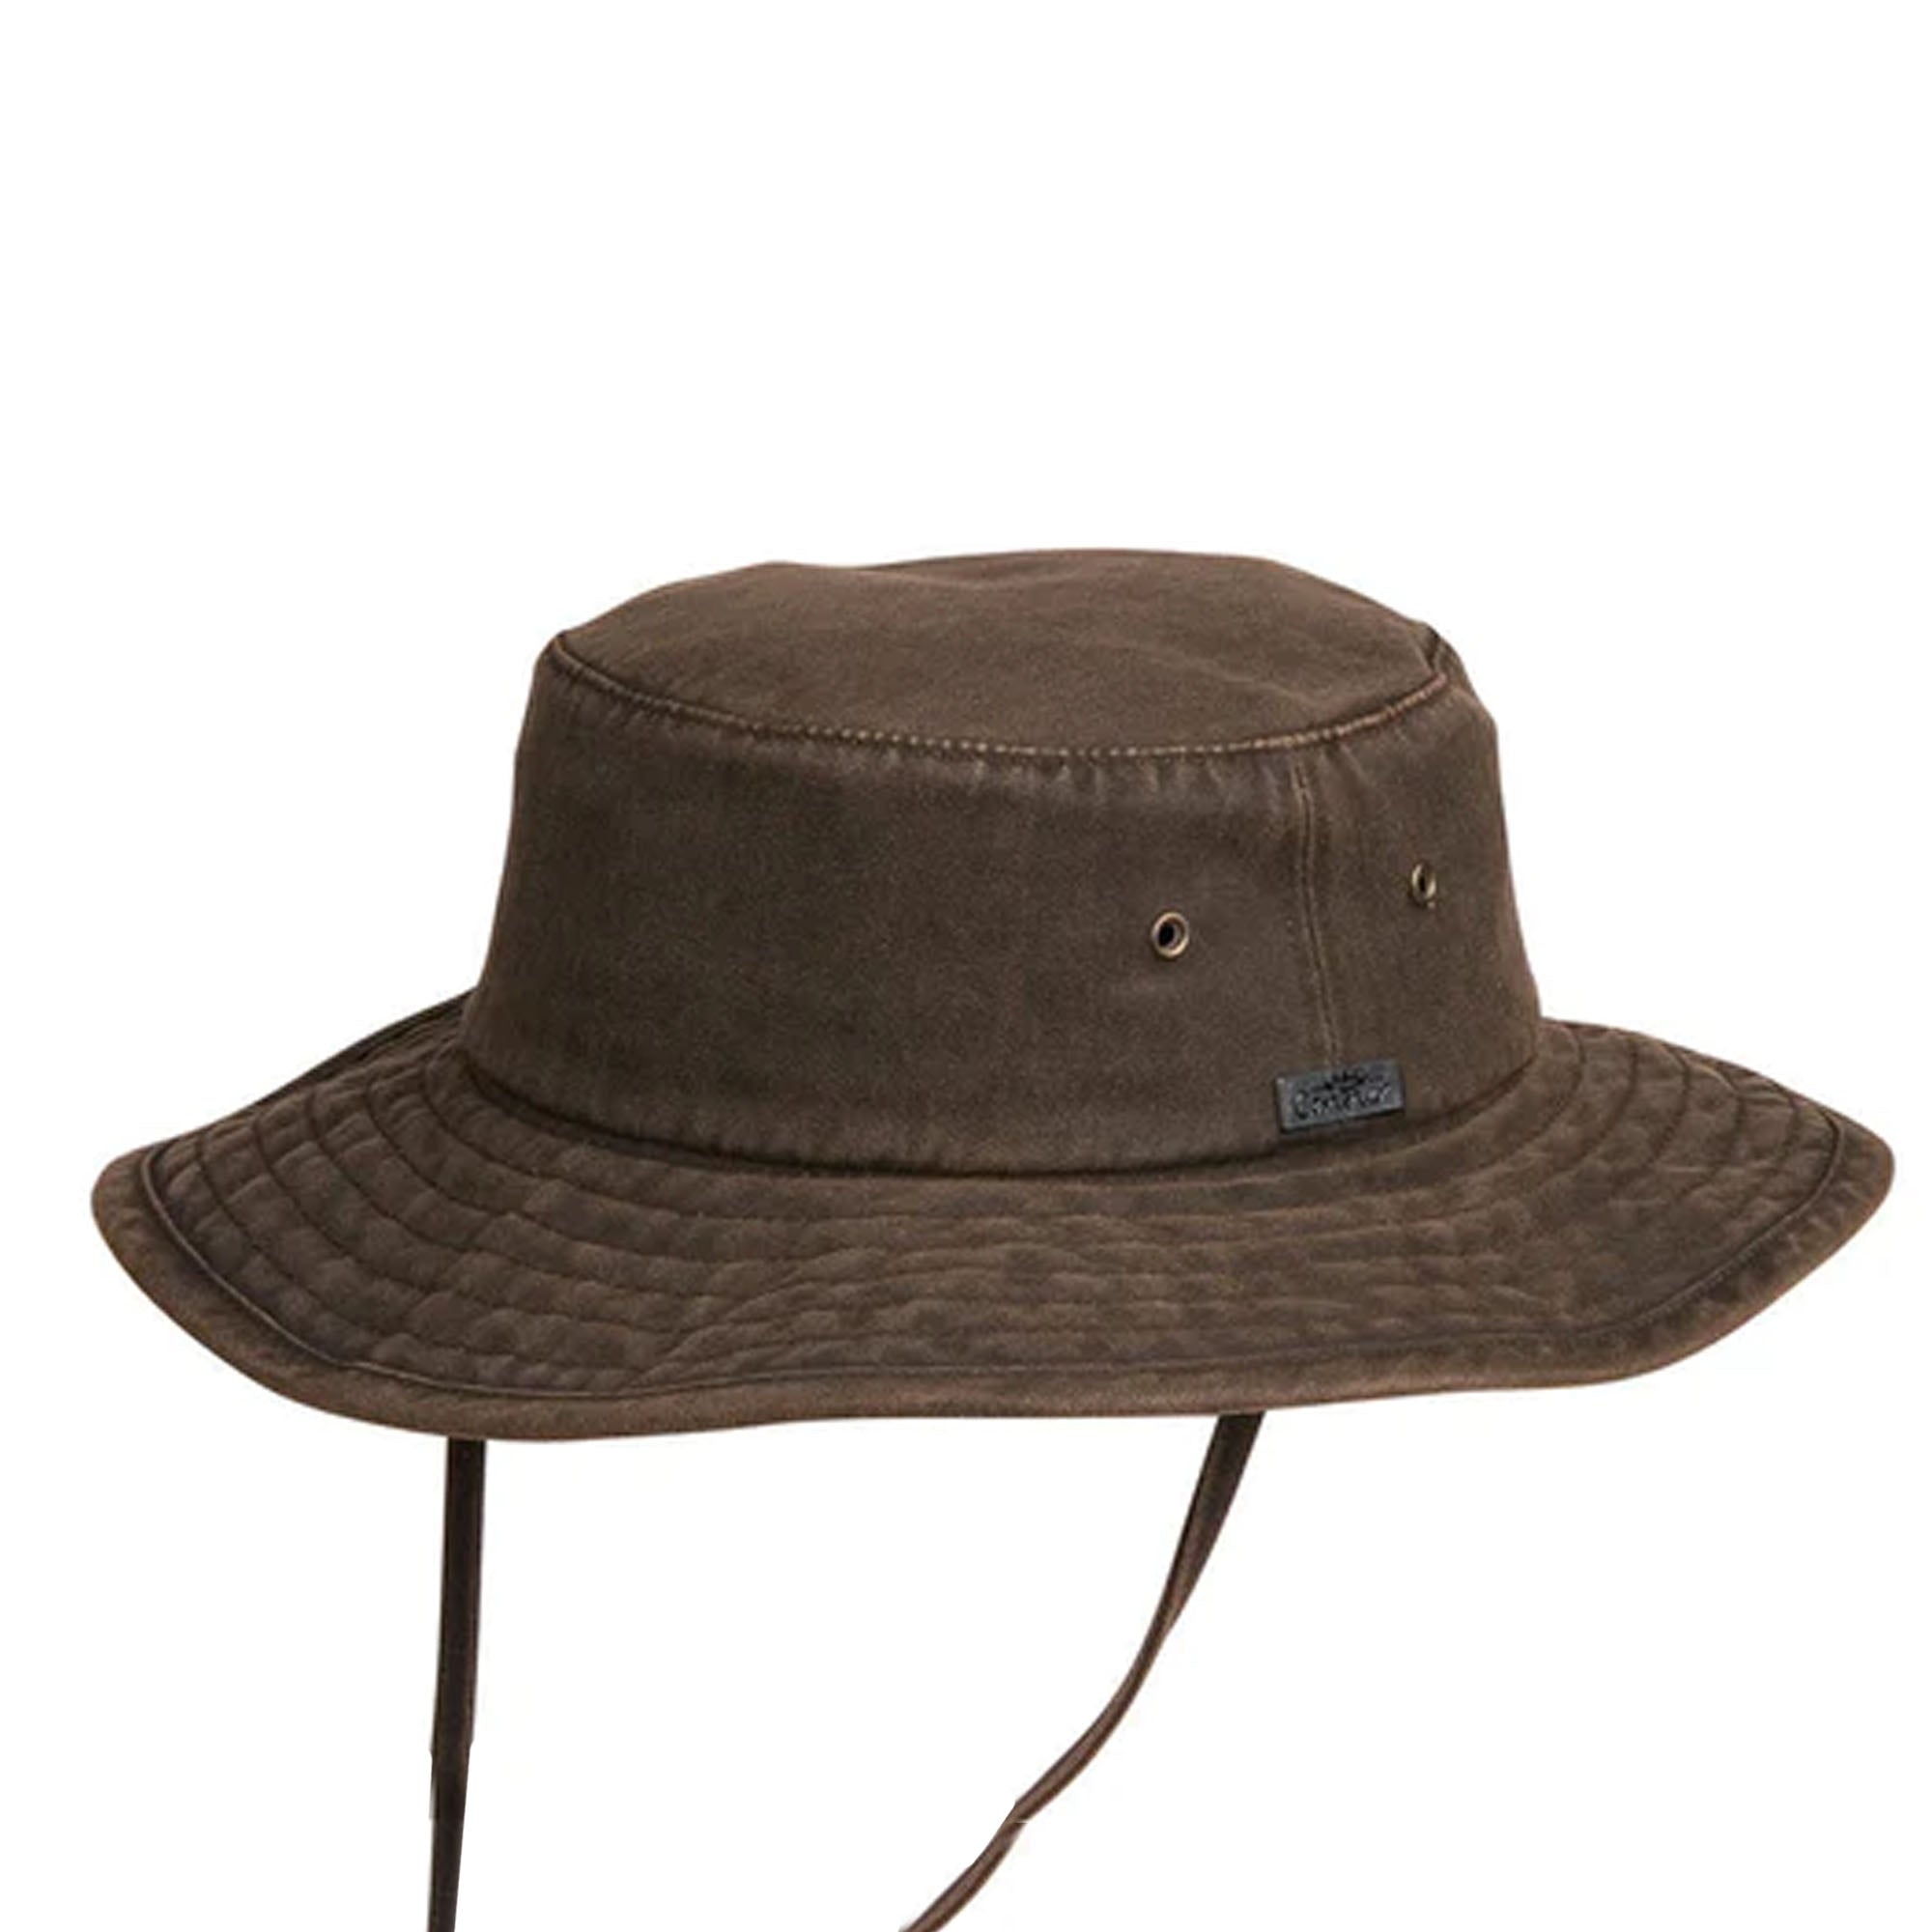 Conner Hats Men's Dusty Road Aussie Waterproof Cotton Hat Brown M